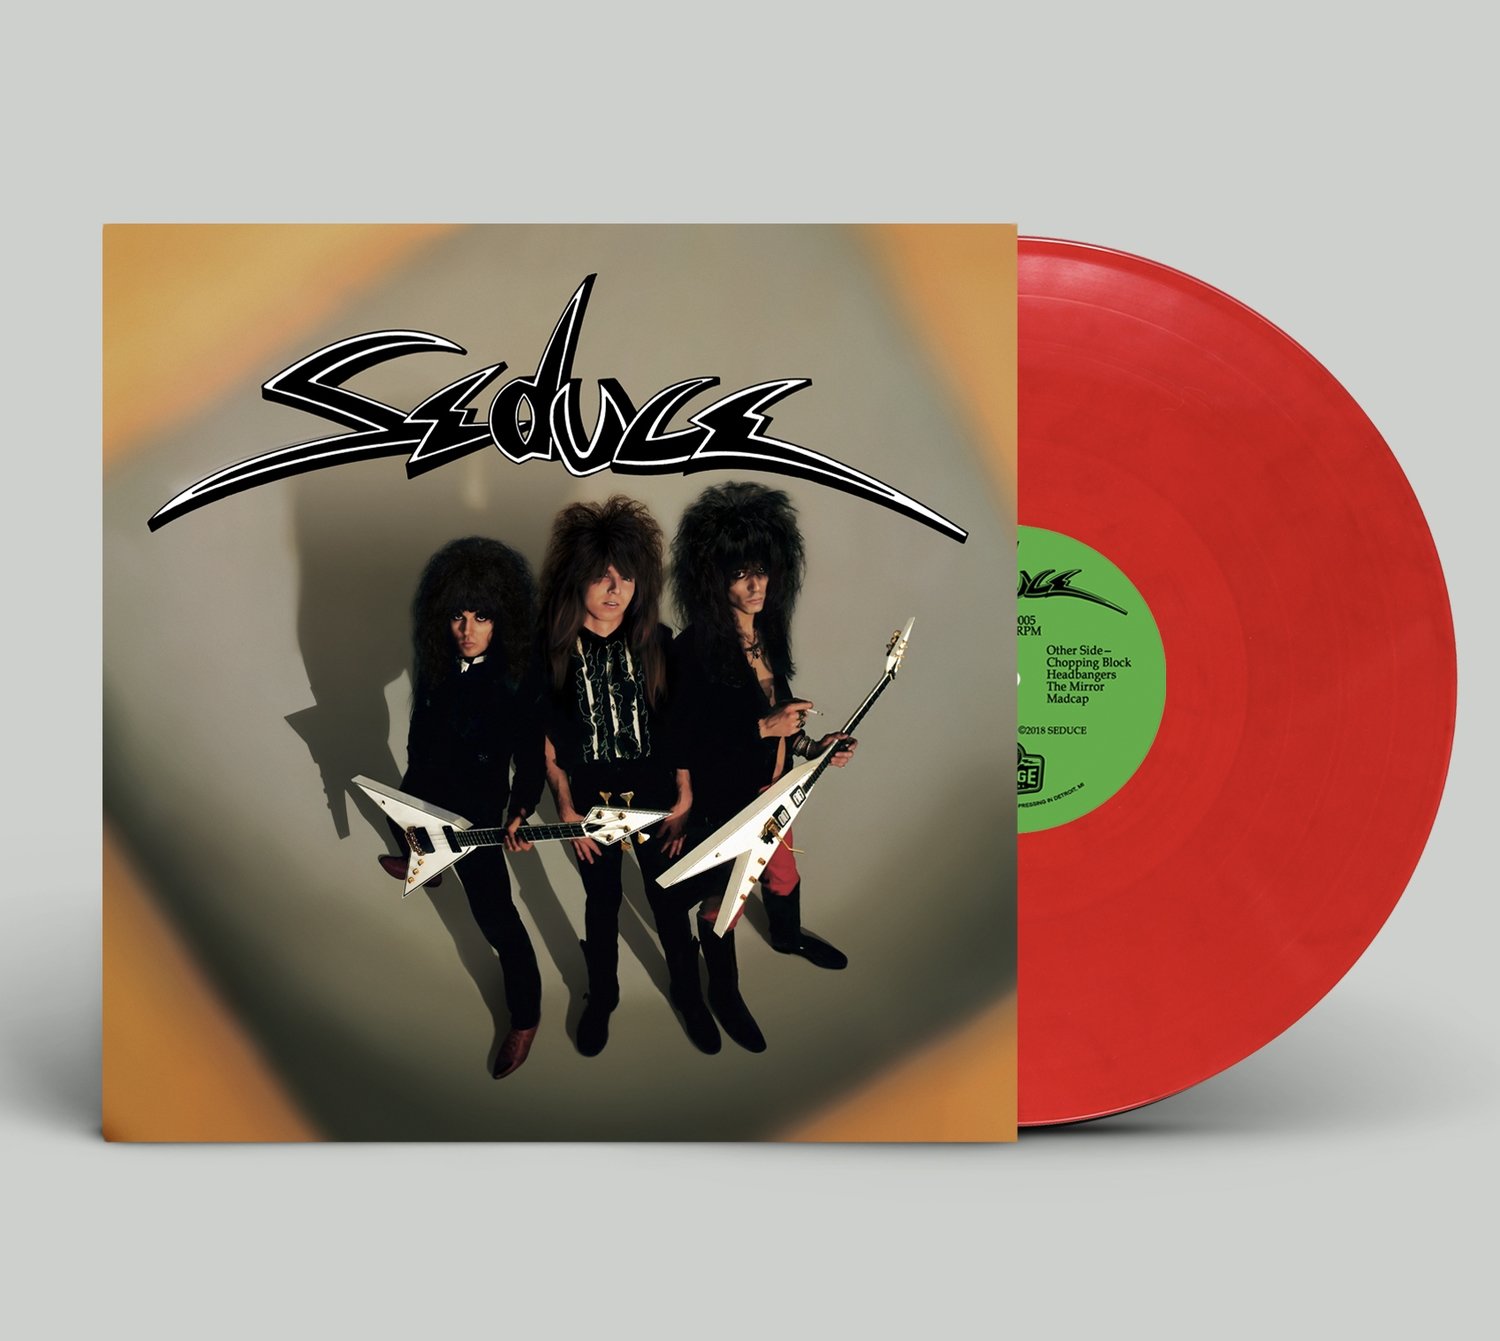 Seduce "Seduce LP" -- Limited Edition Red Vinyl